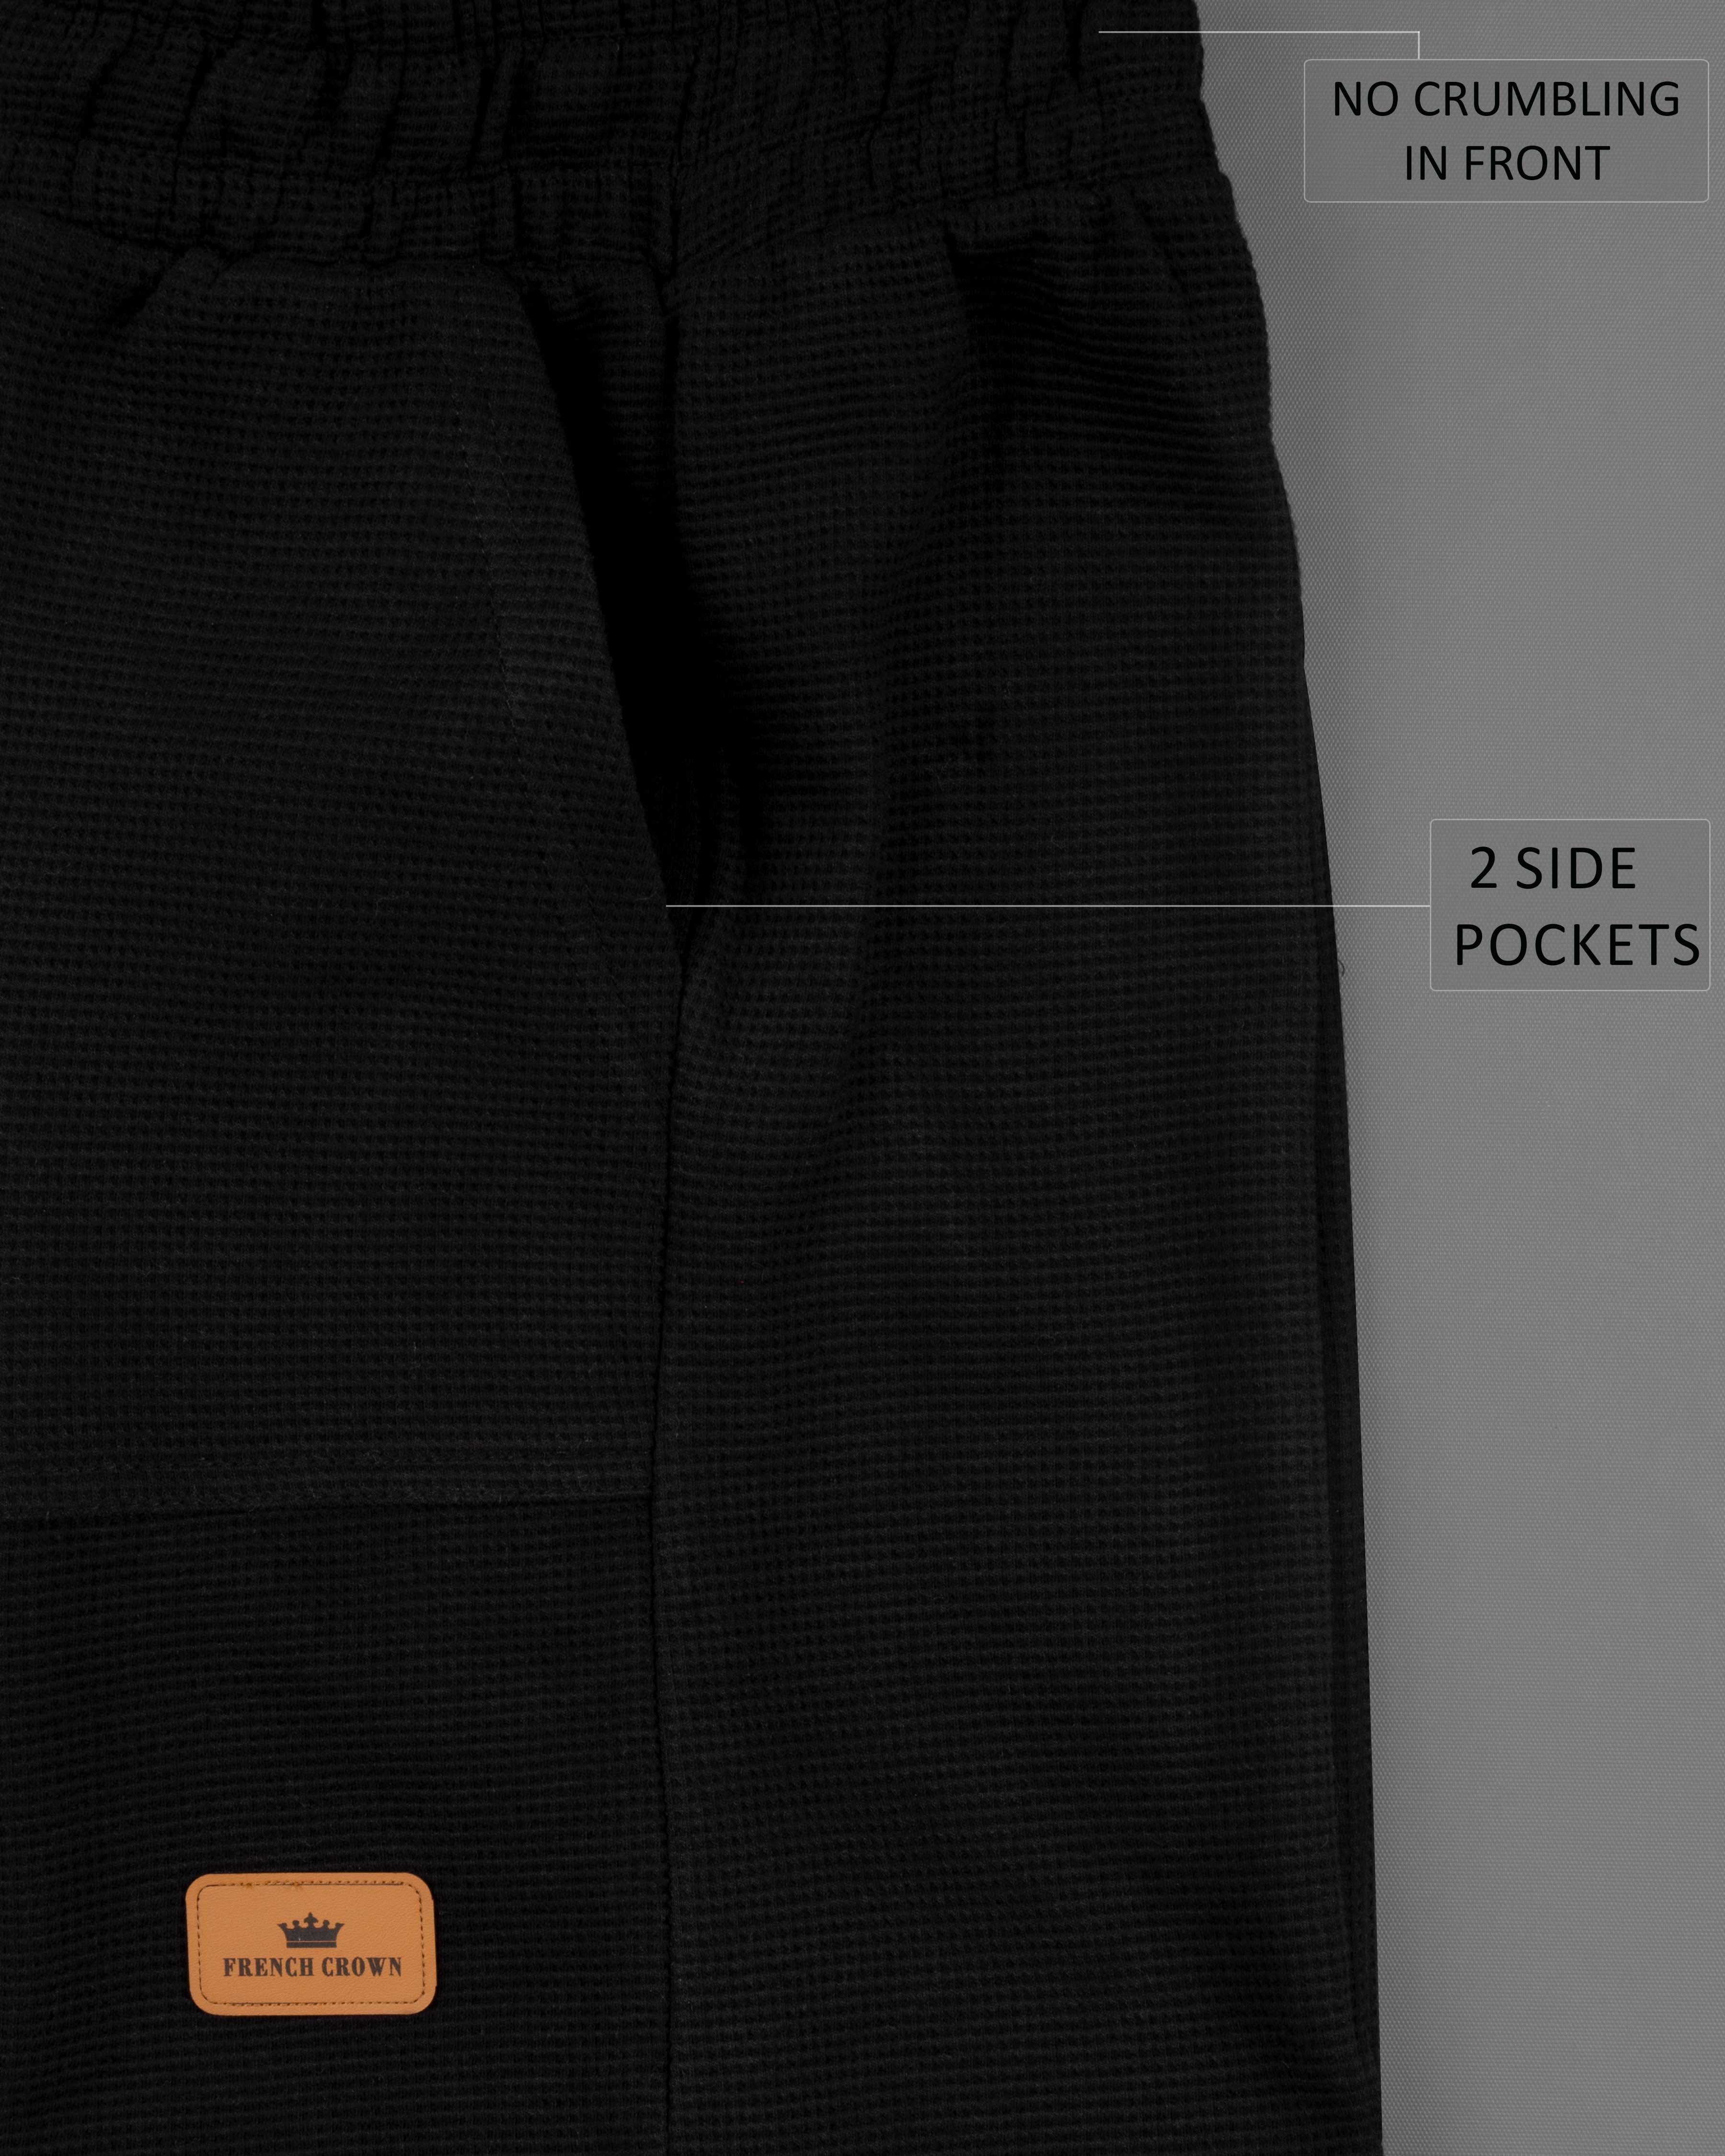 Jade Black Premium Cotton T-shirt with Shorts Combo TS764-SR174-S, TS764-SR174-M, TS764-SR174-L, TS764-SR174-XL, TS764-SR174-XXL